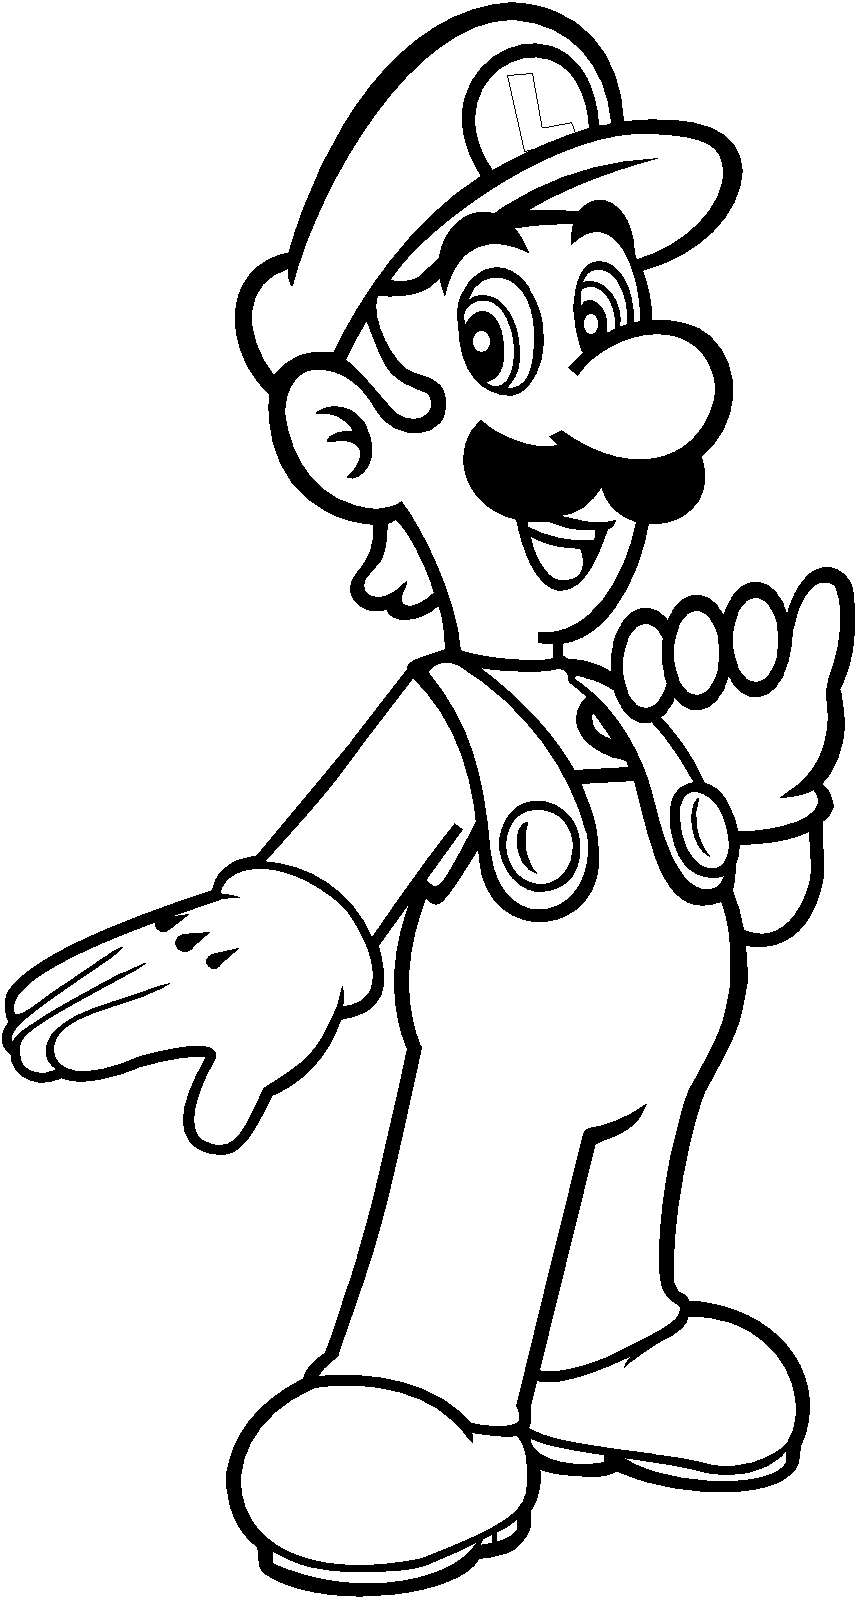 Luigi Coloring By Blistinaorgin On Deviantart Super Mario Coloring Pages Mario Coloring Pages Cartoon Coloring Pages